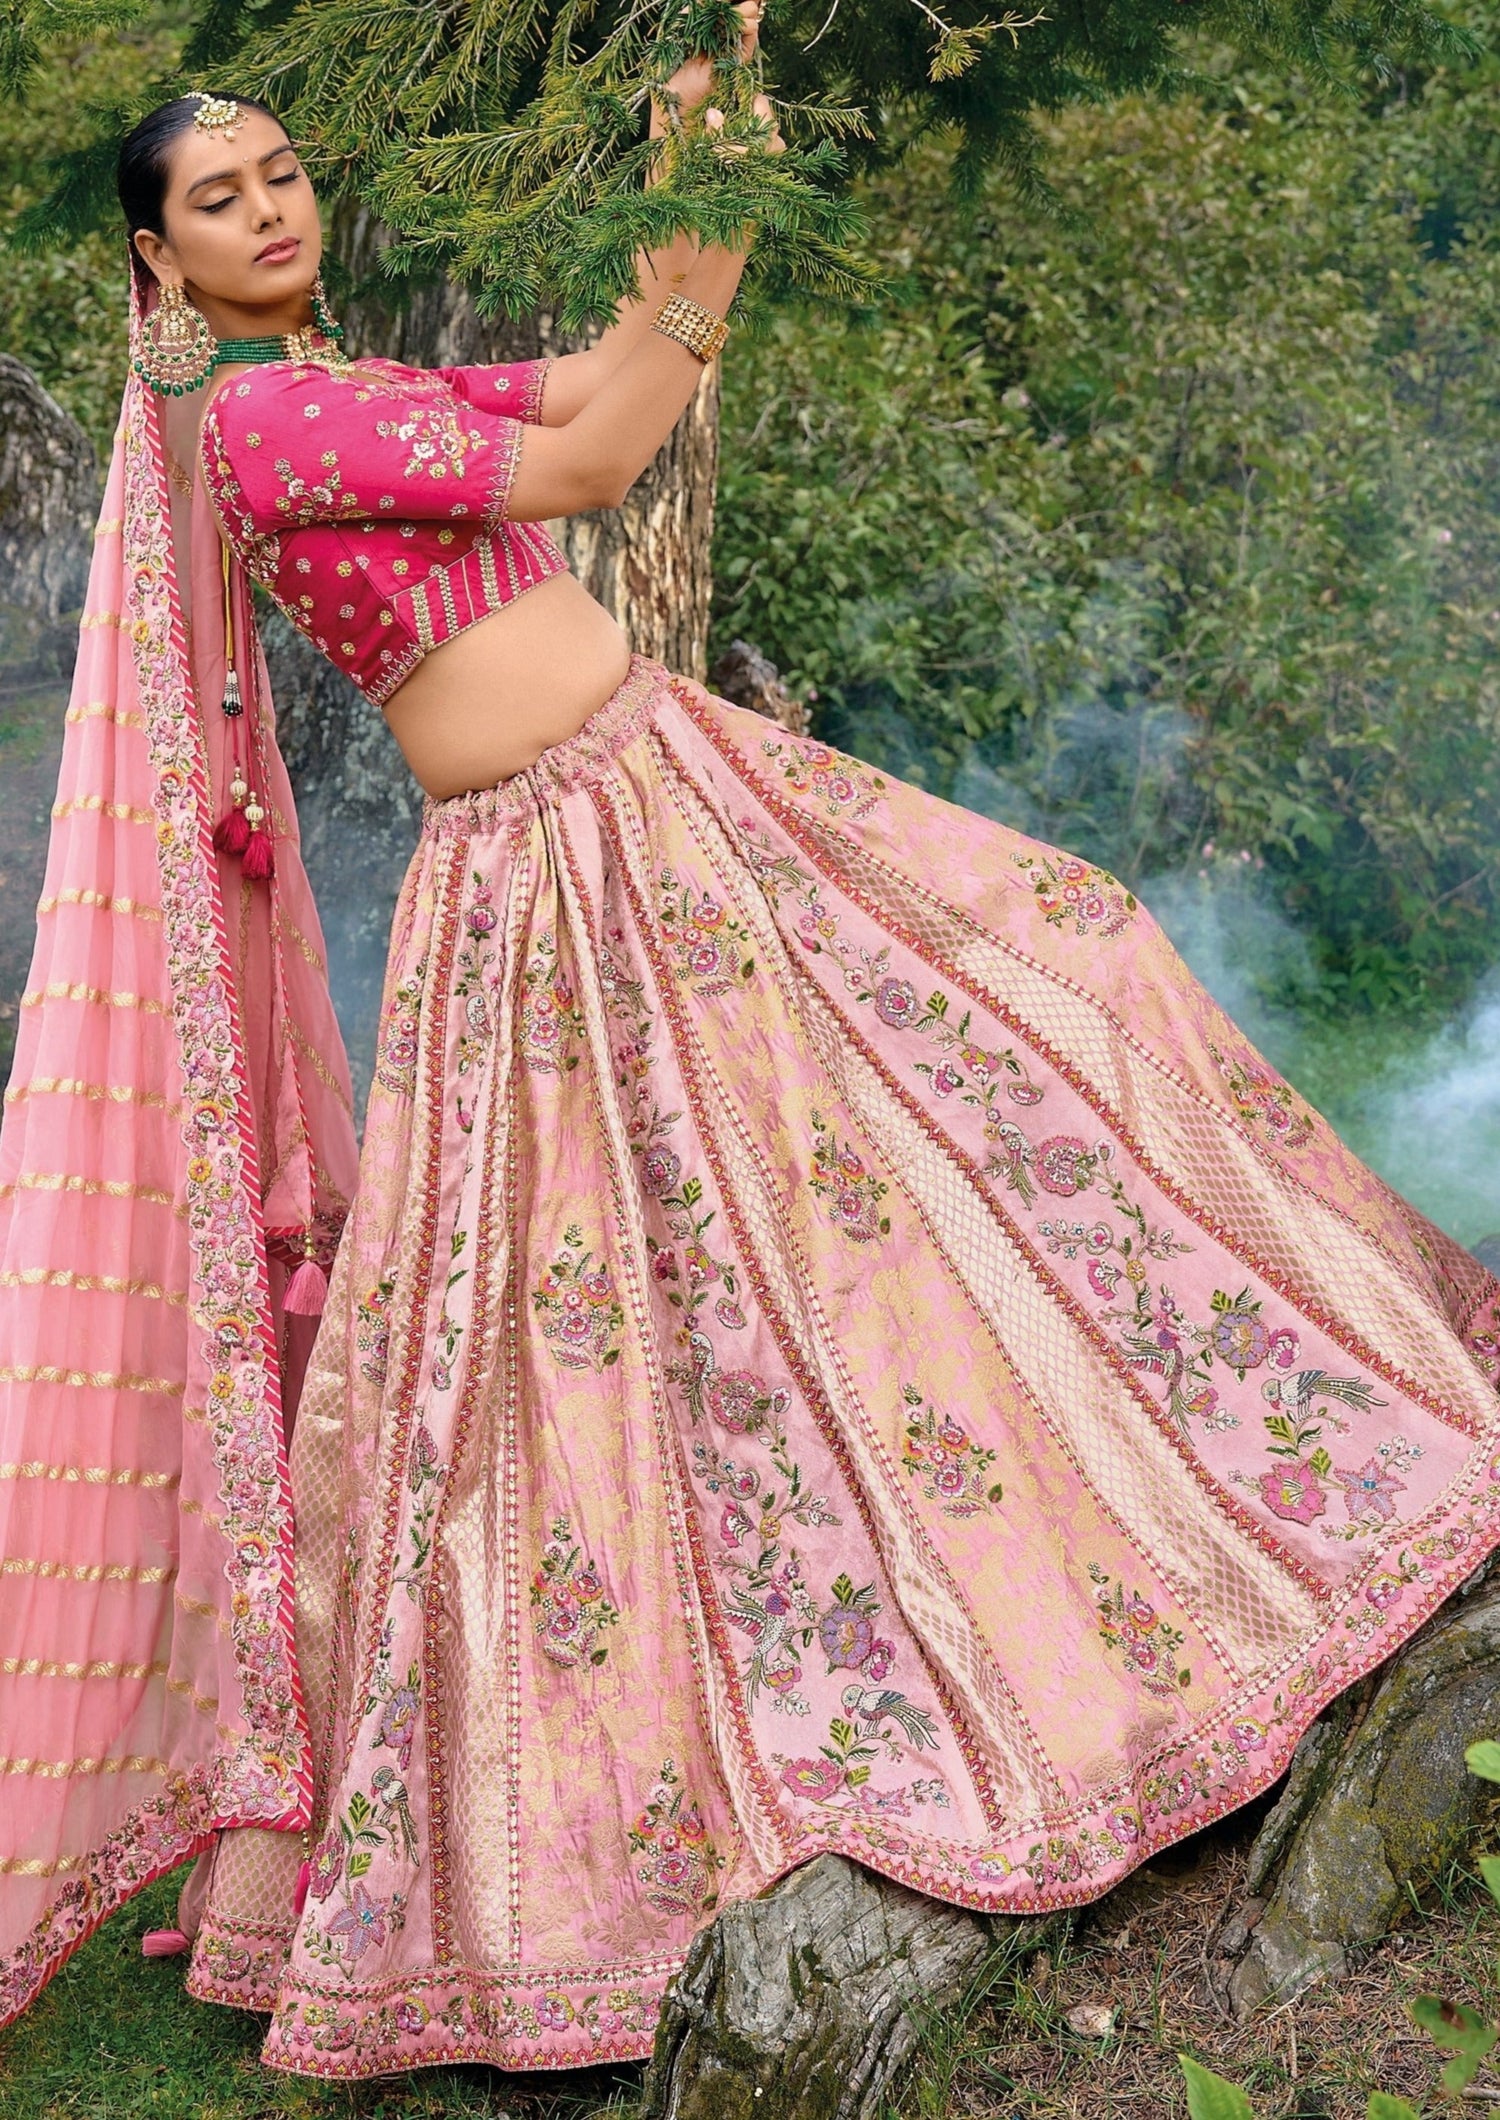 Buy Latest Indian Wedding Guest Lehenga Choli Online